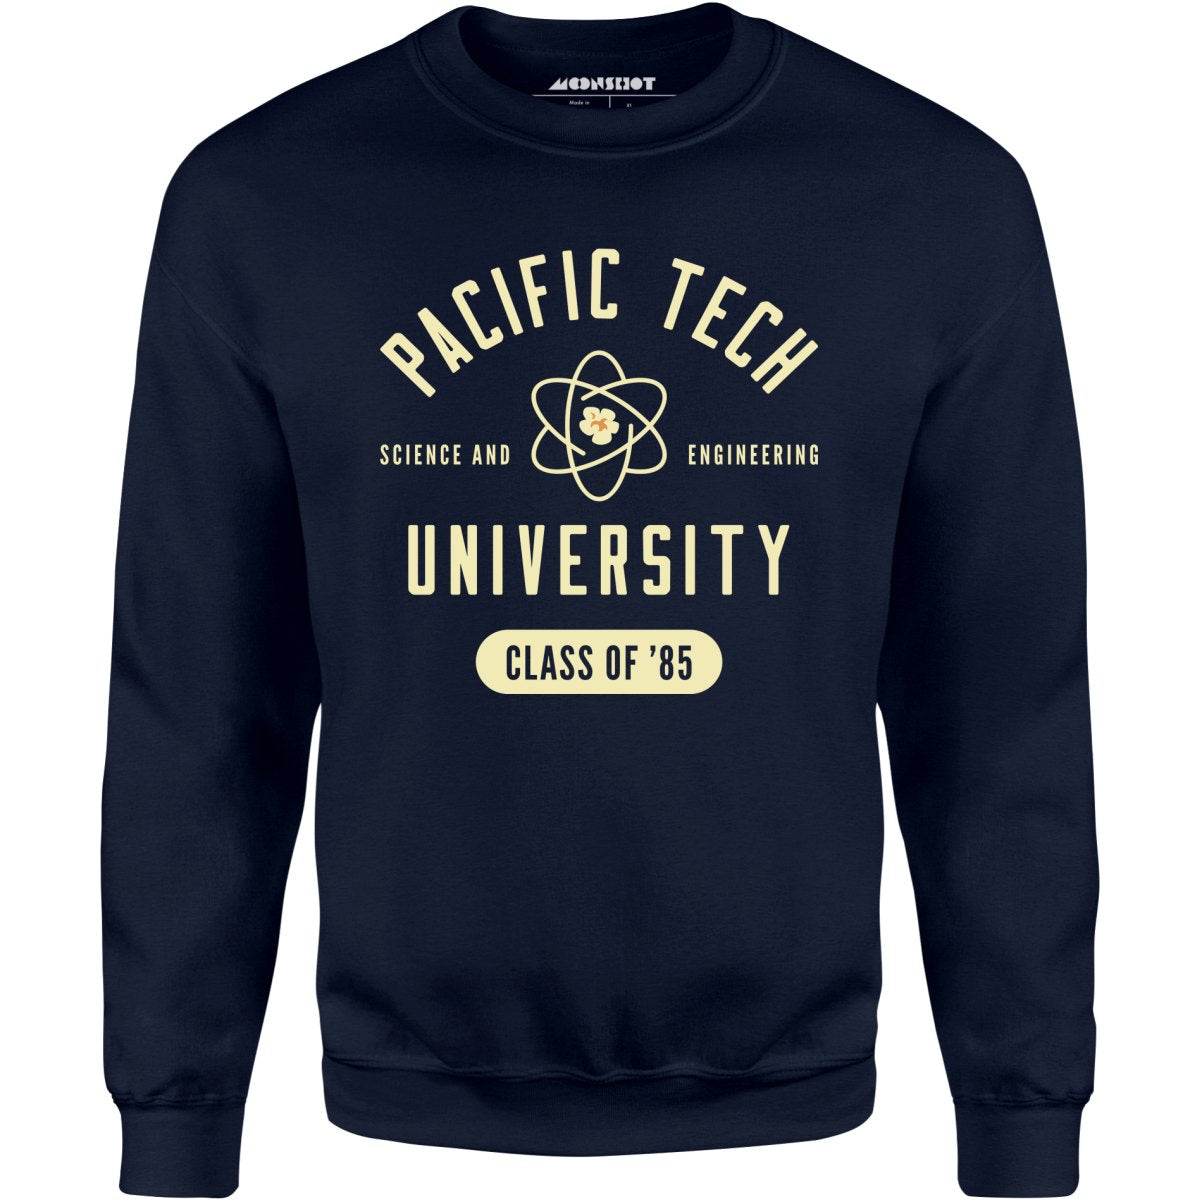 Real Genius - Pacific Tech University - Unisex Sweatshirt